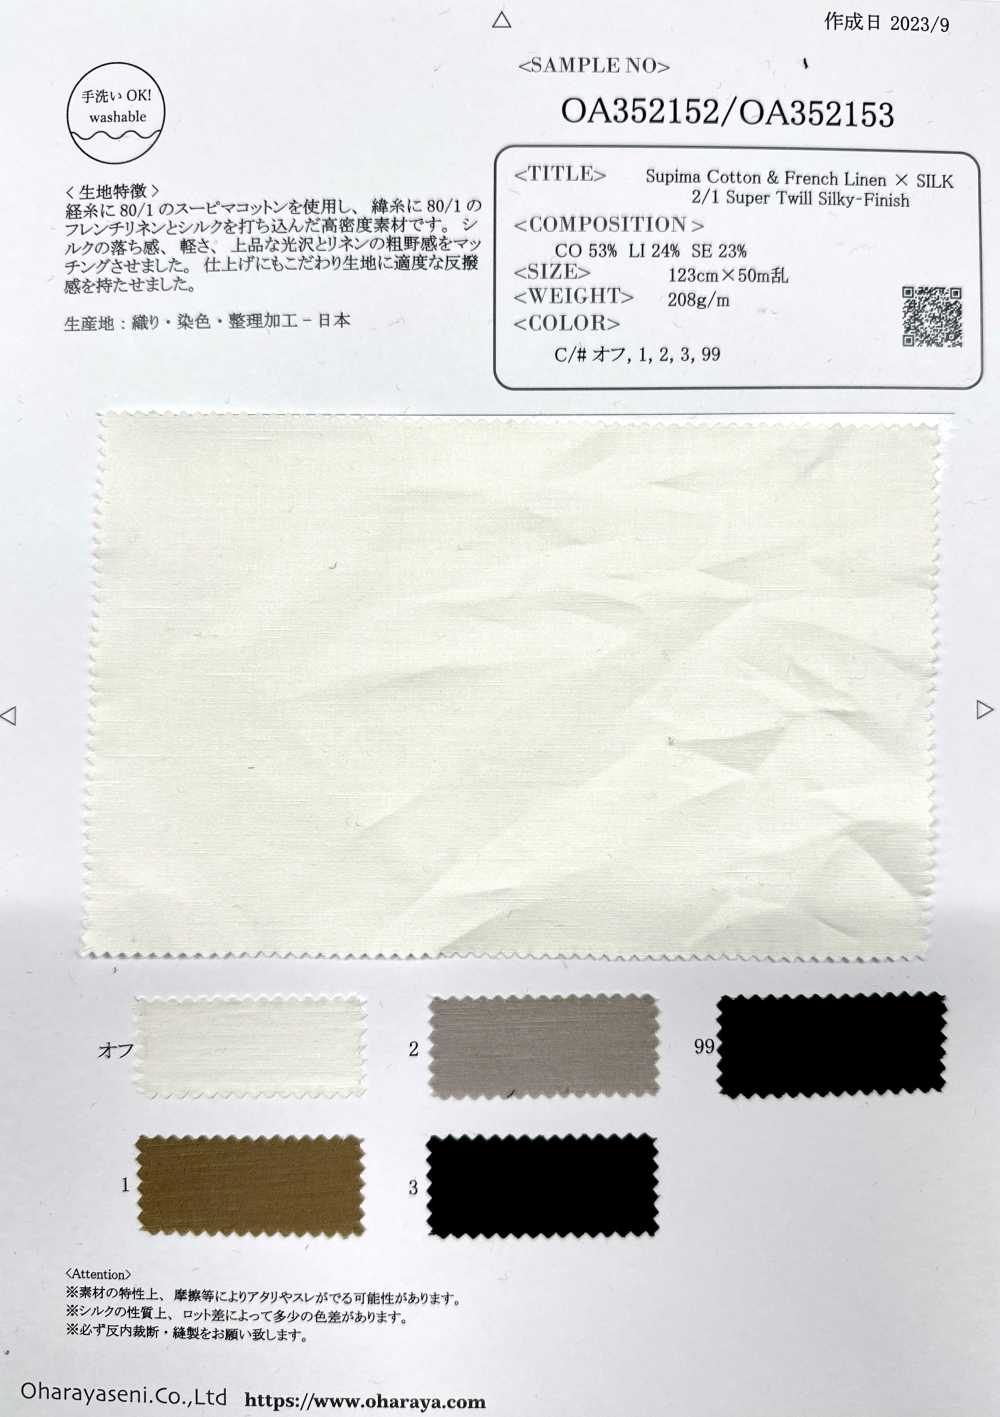 OA352152 Supima Cotton & French Linen × SILK 2/1 Super Twill Silky-Finish[원단] Oharayaseni